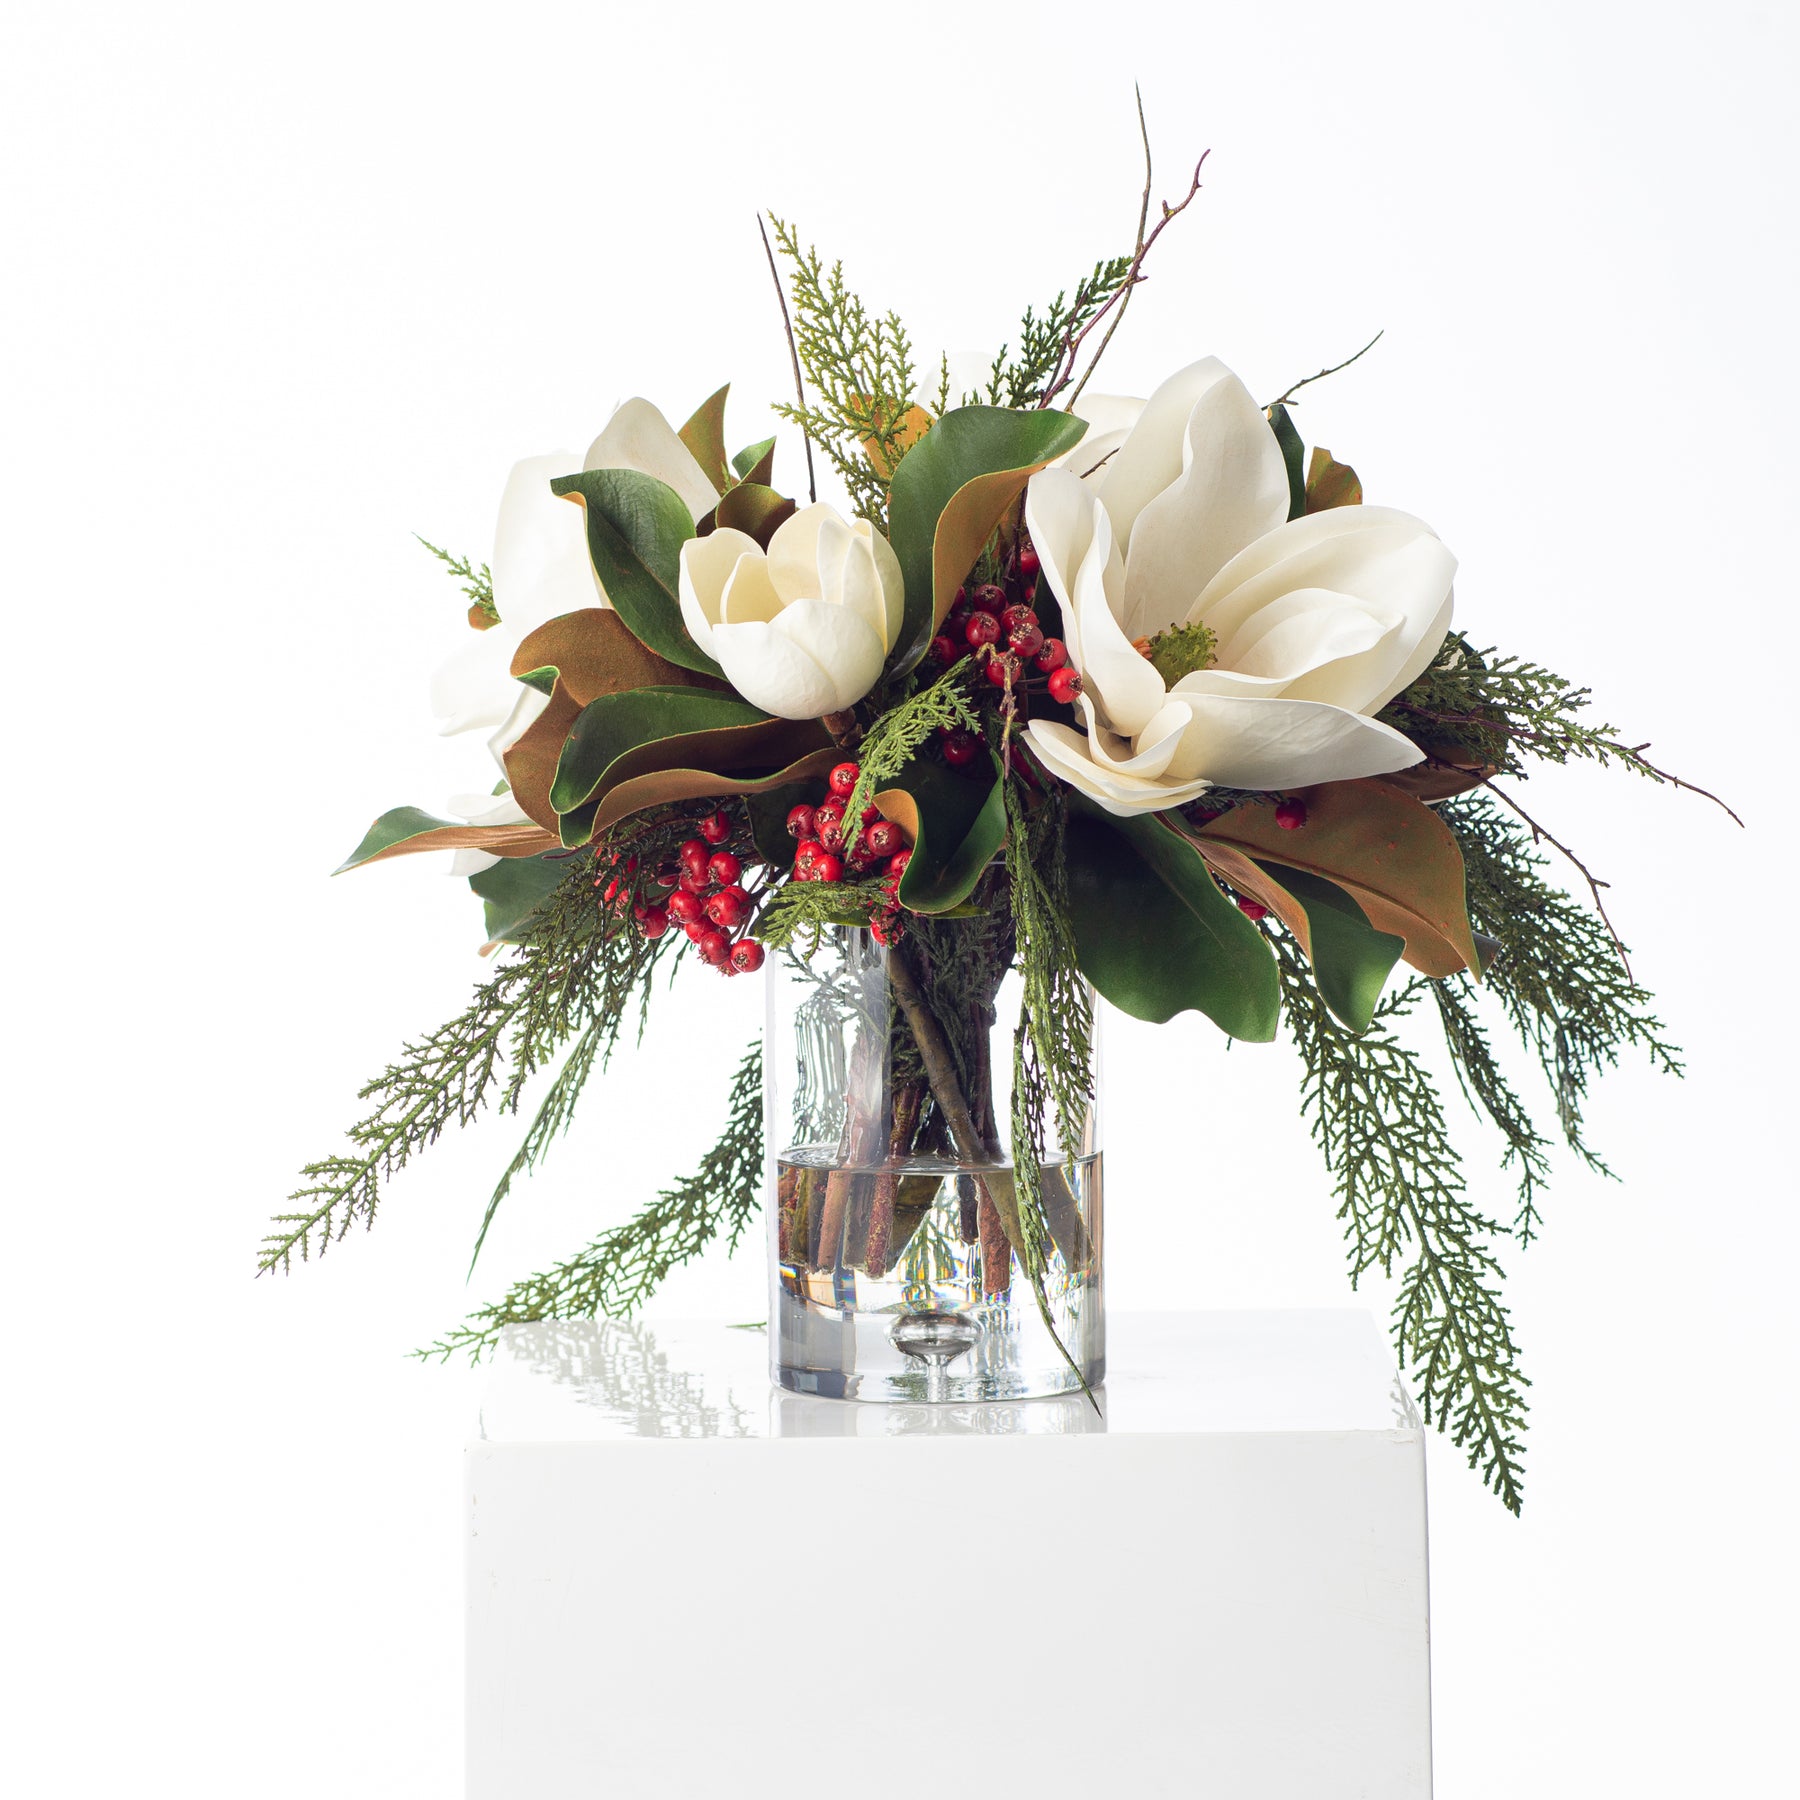 Winter Floral Arrangements - WGV International - Wholesale Glass